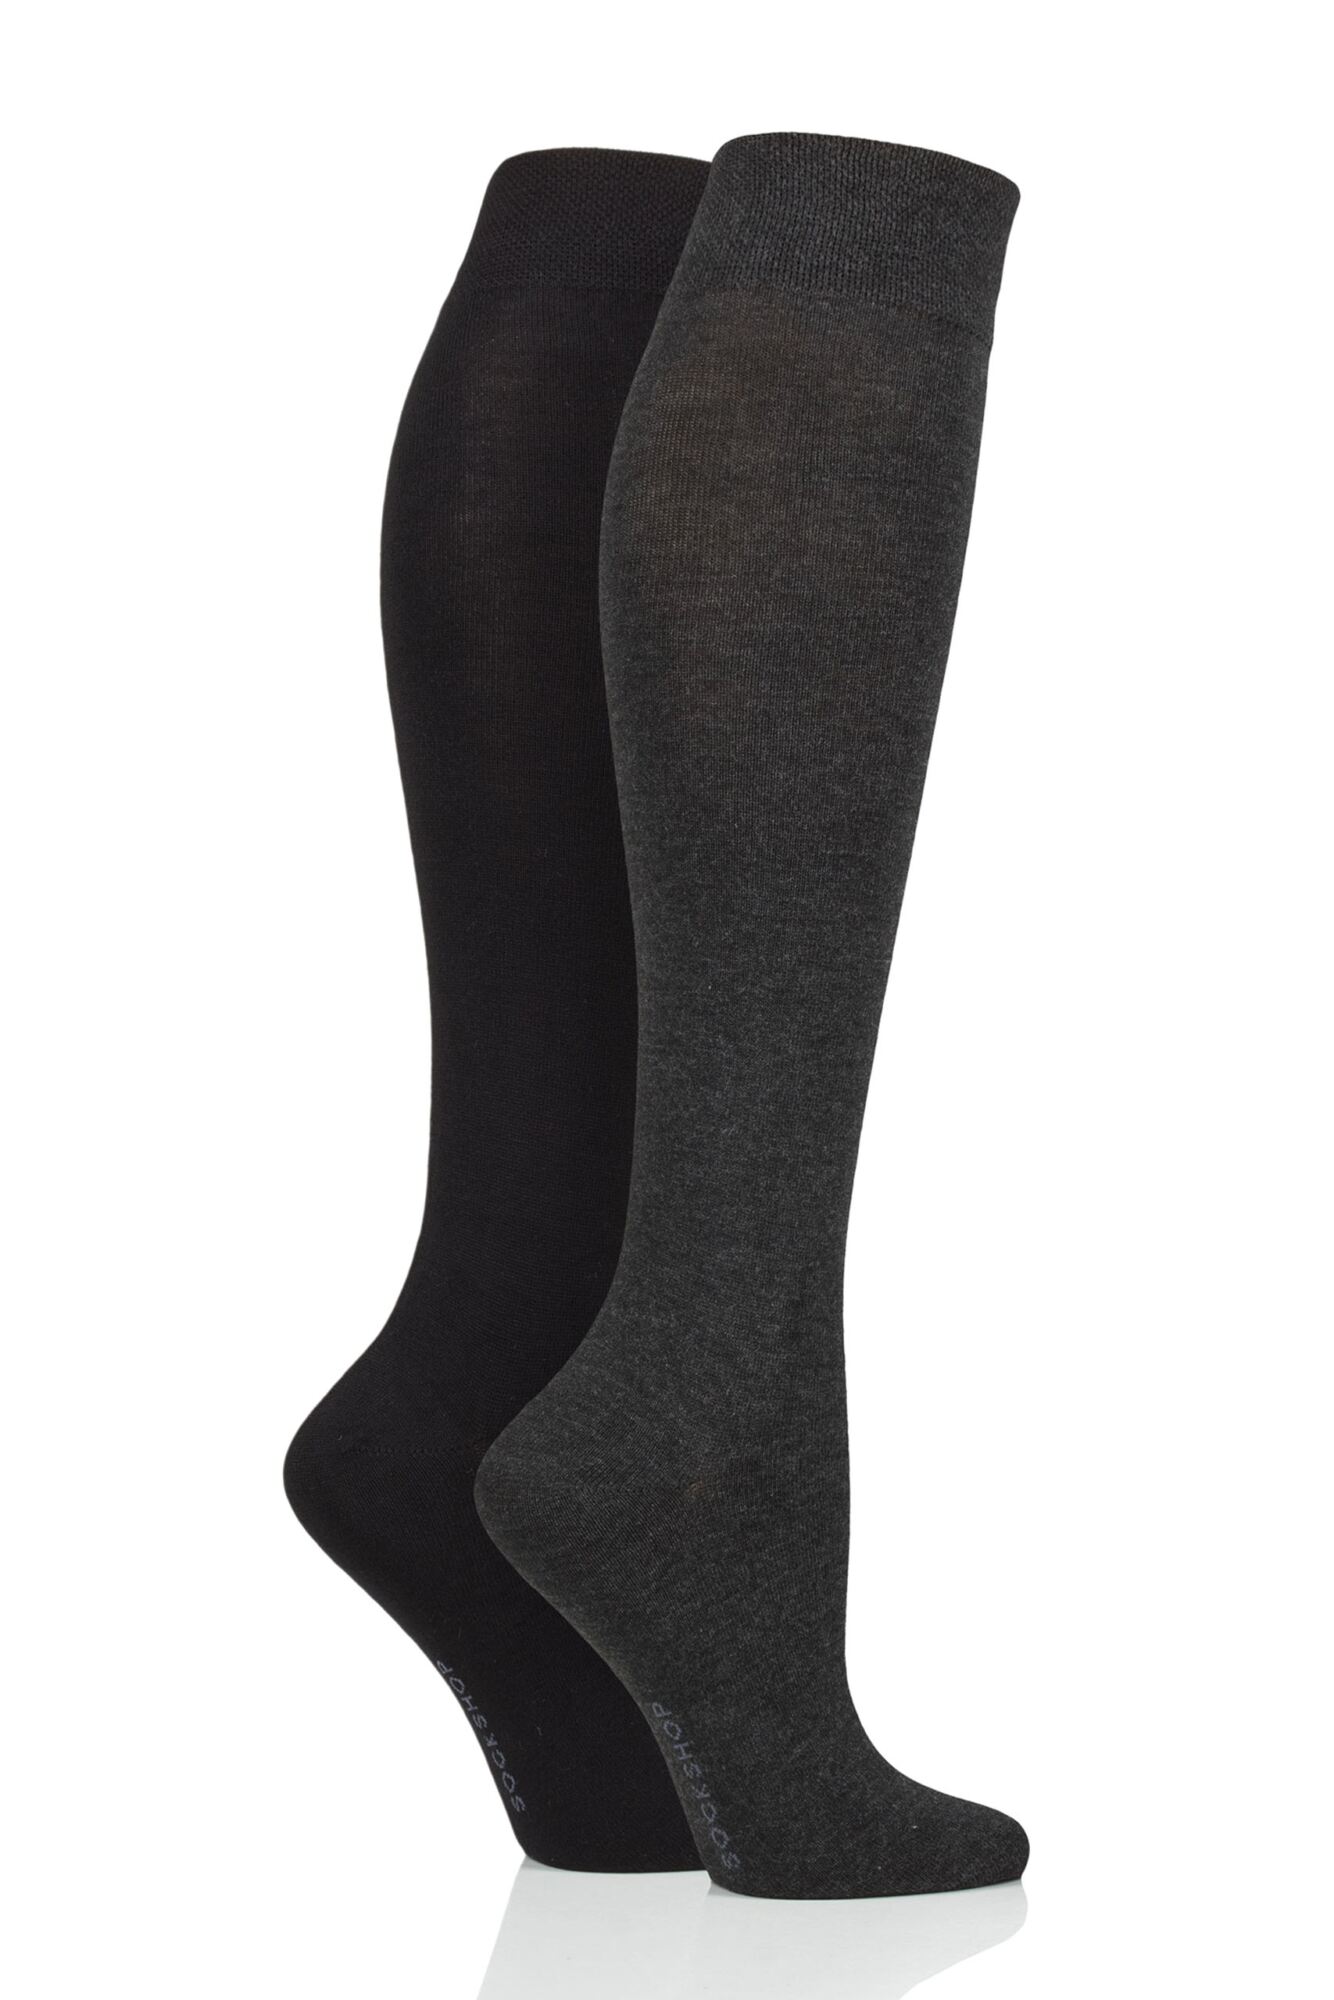 2 Pair Plain And Patterned Bamboo Knee High Socks With Smooth Toe Seams Ladies - Sockshop